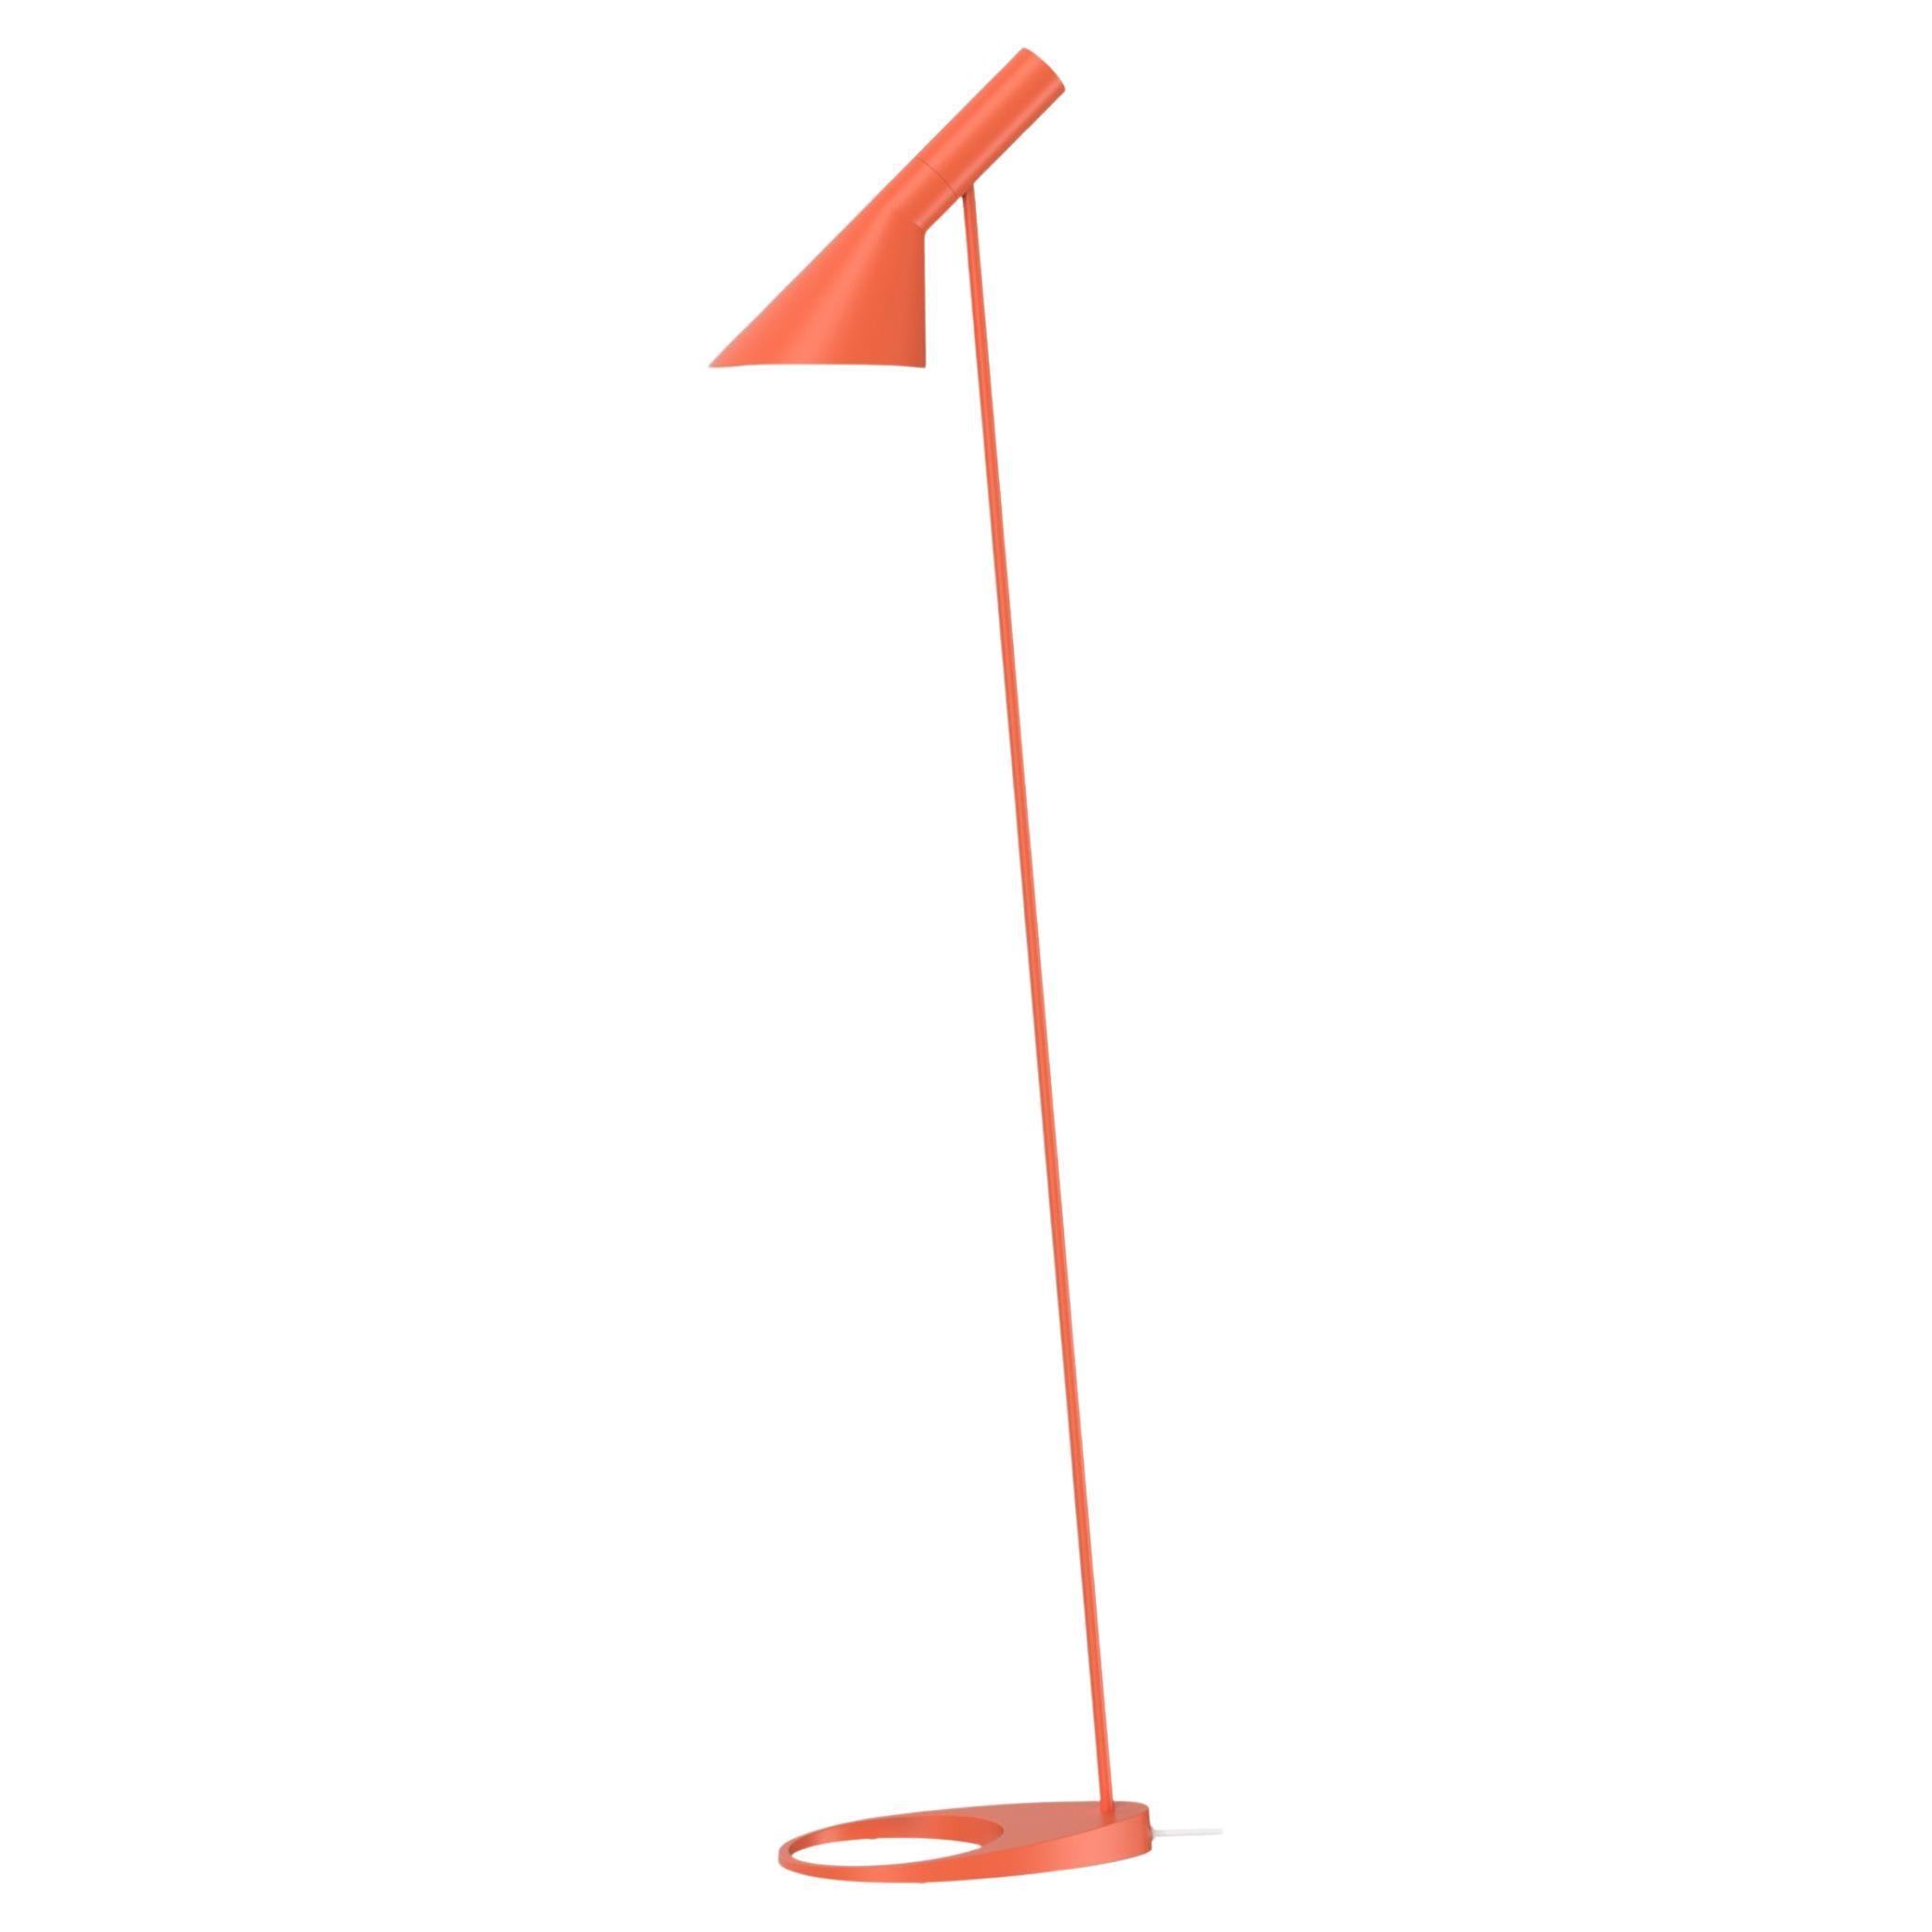 Arne Jacobsen AJ Floor Lamp in Electric Orange for Louis Poulsen